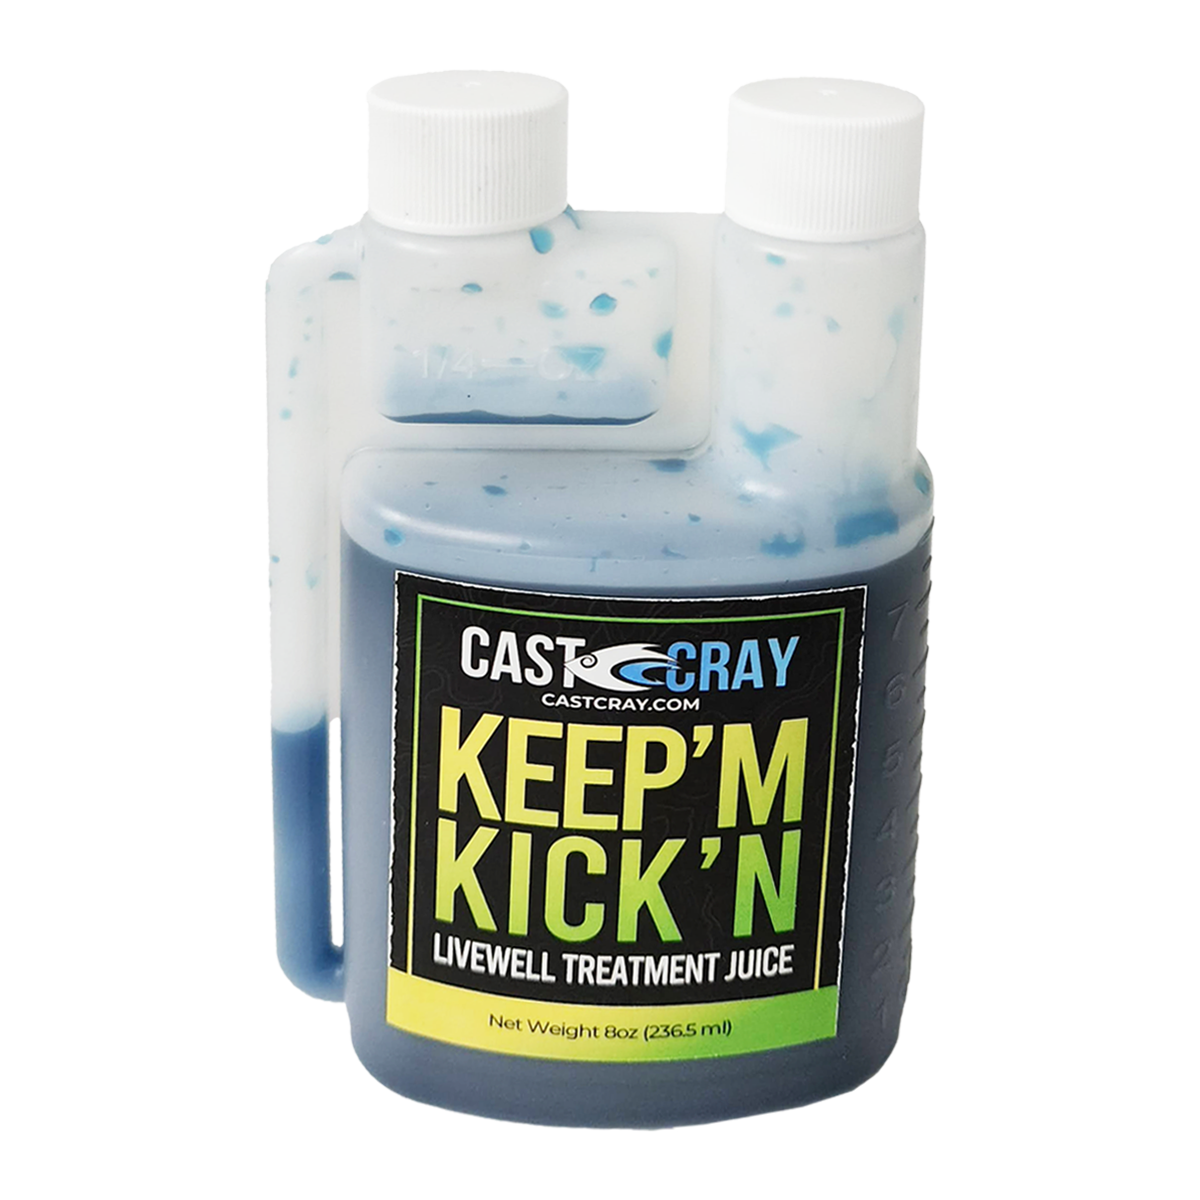 KEEP'M KICK'N - Livewell Treatment Juice - 8 oz - Cast Cray Outdoors